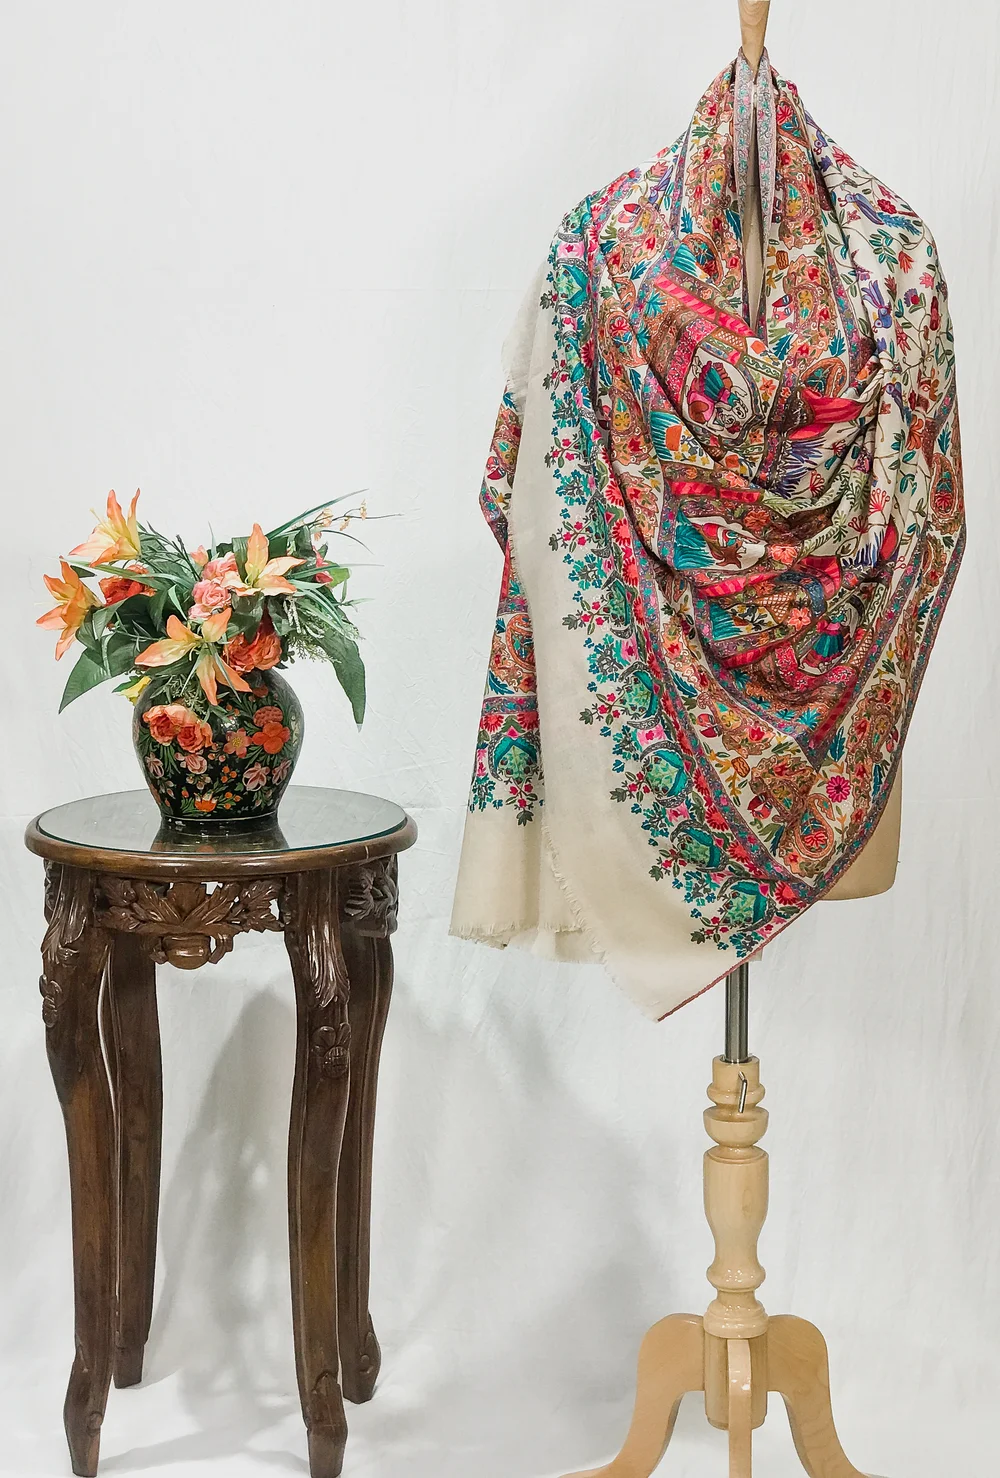 Off-White Fine Wool Textured Shawl with Silk Thread Aari and Zari Jama Embroidery